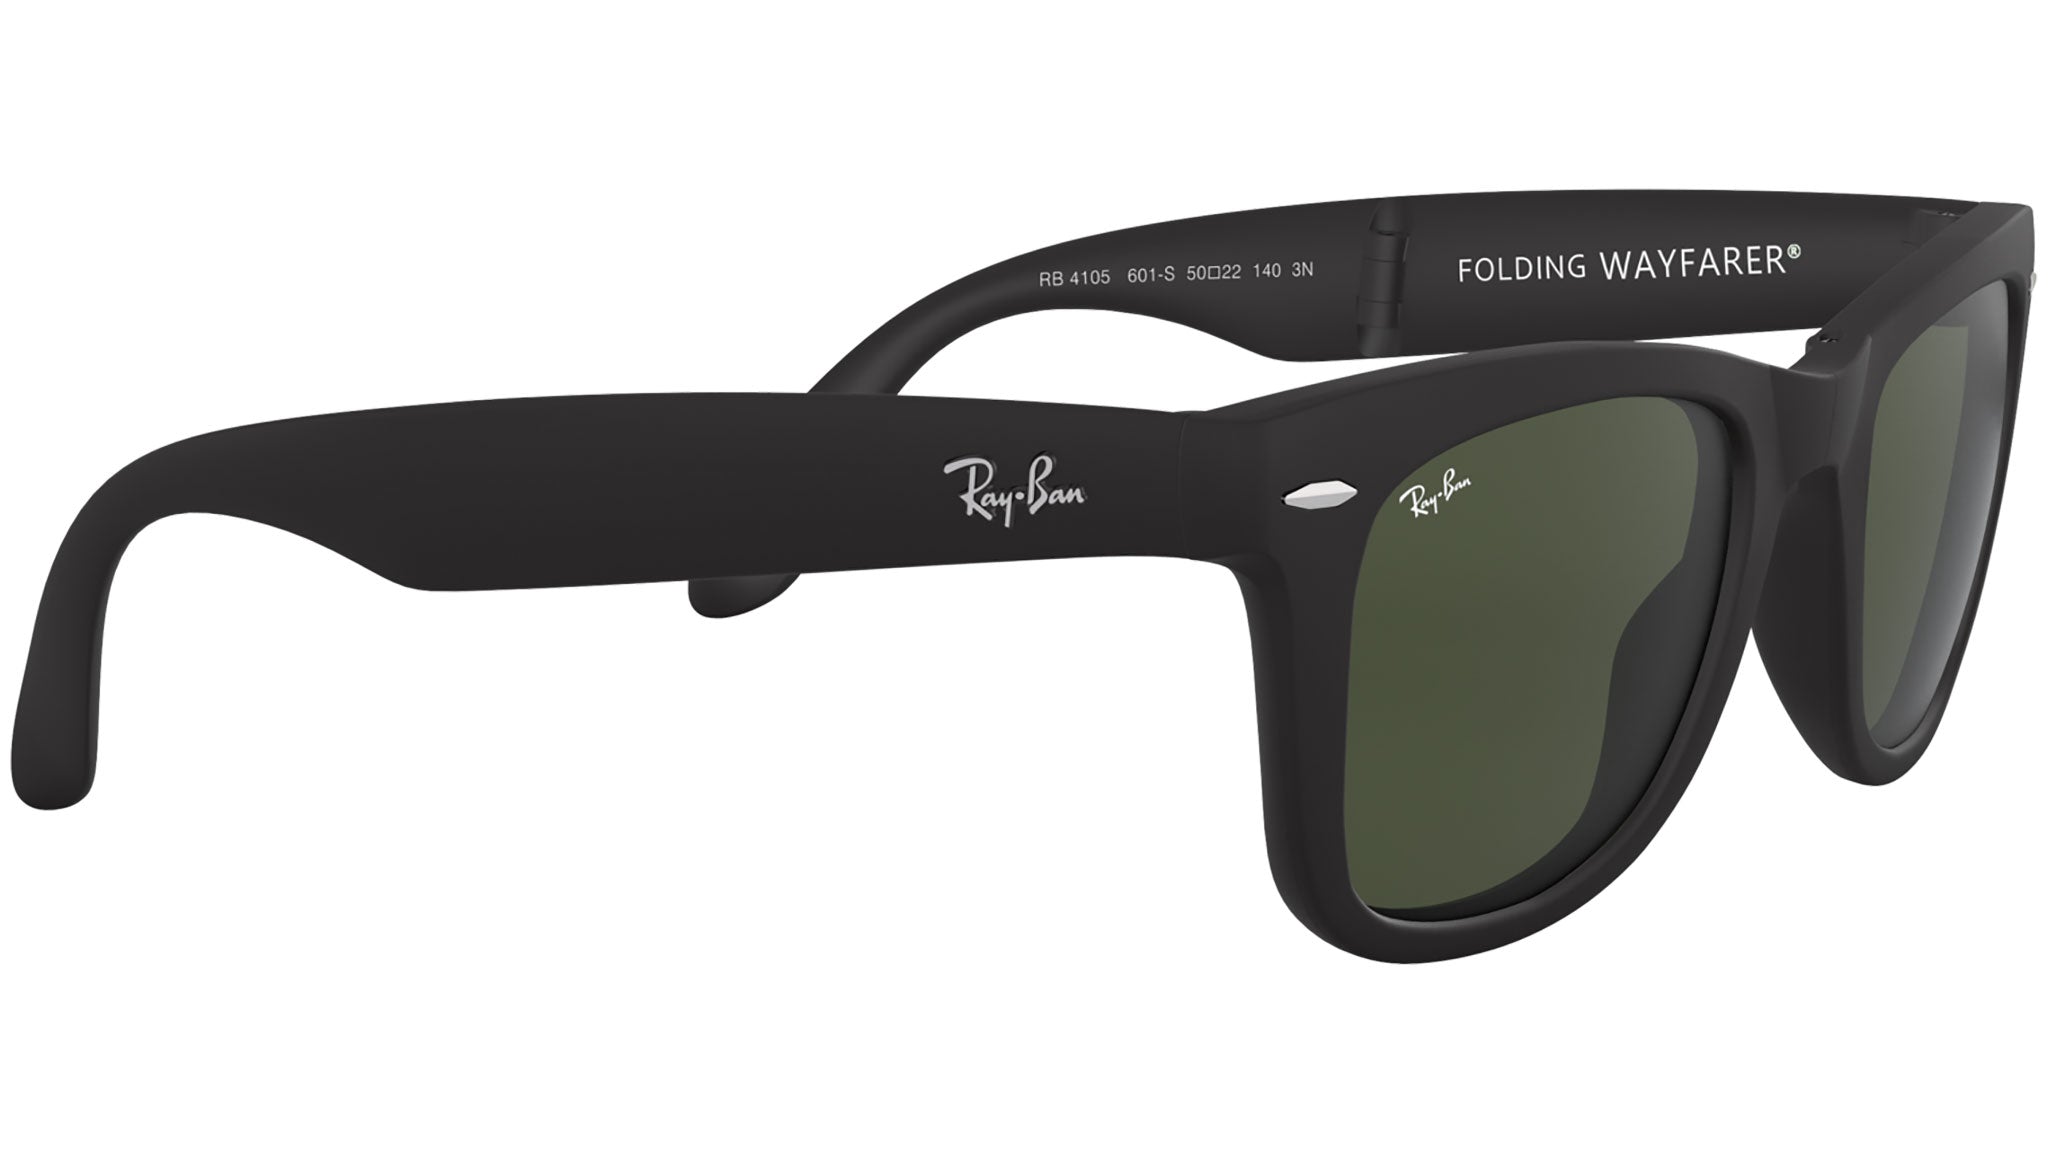 Share more than 204 ray ban folding sunglasses latest